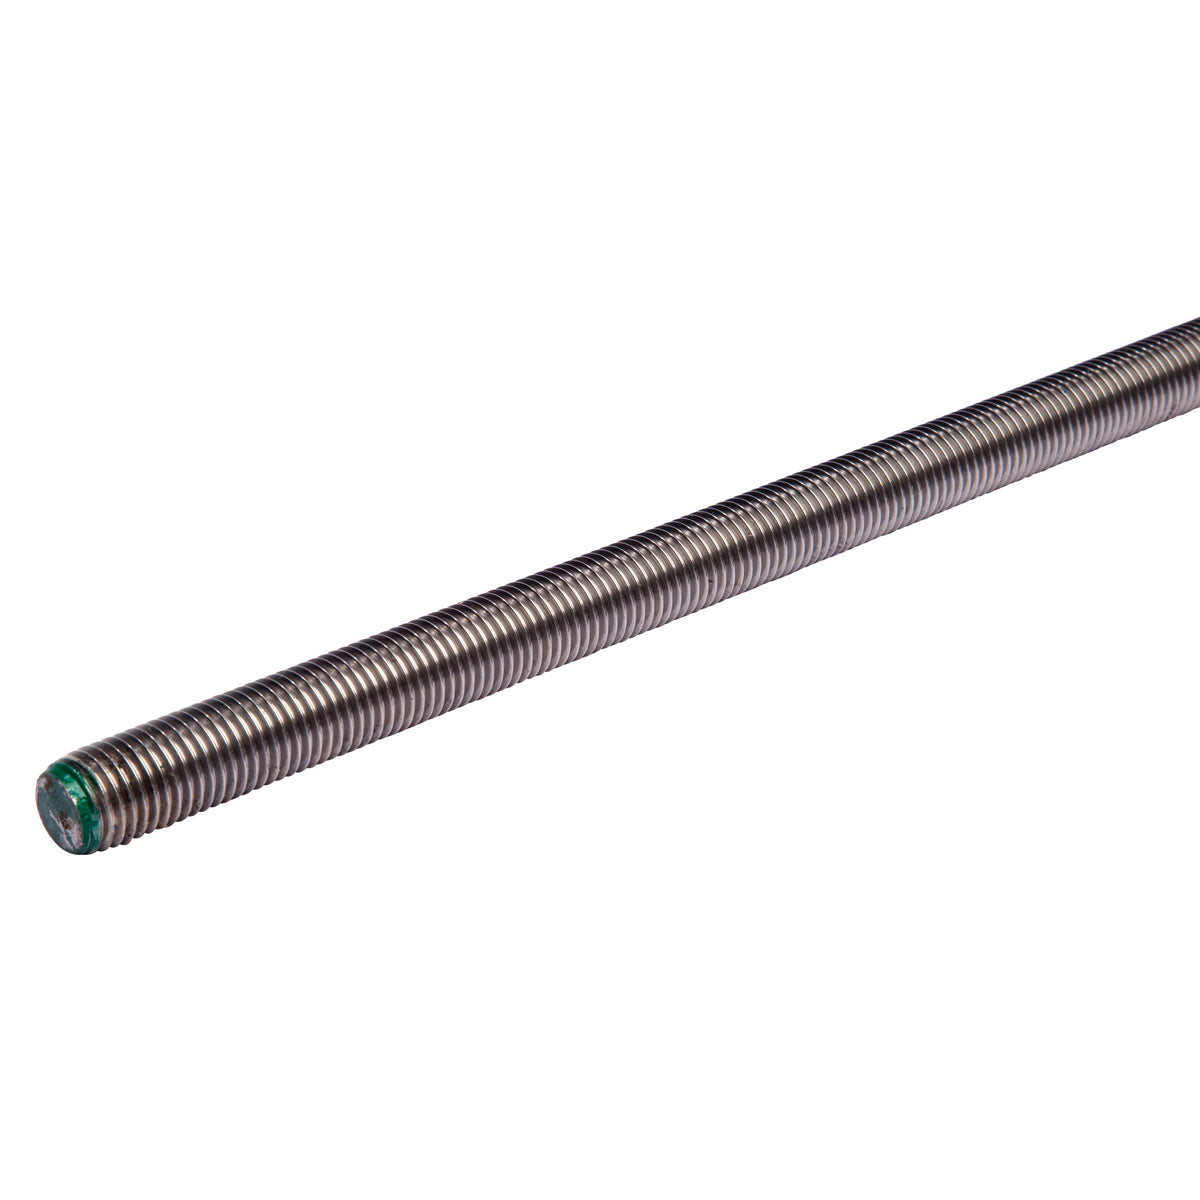 Stainless Steel Threaded Bar - M12 x 1 m